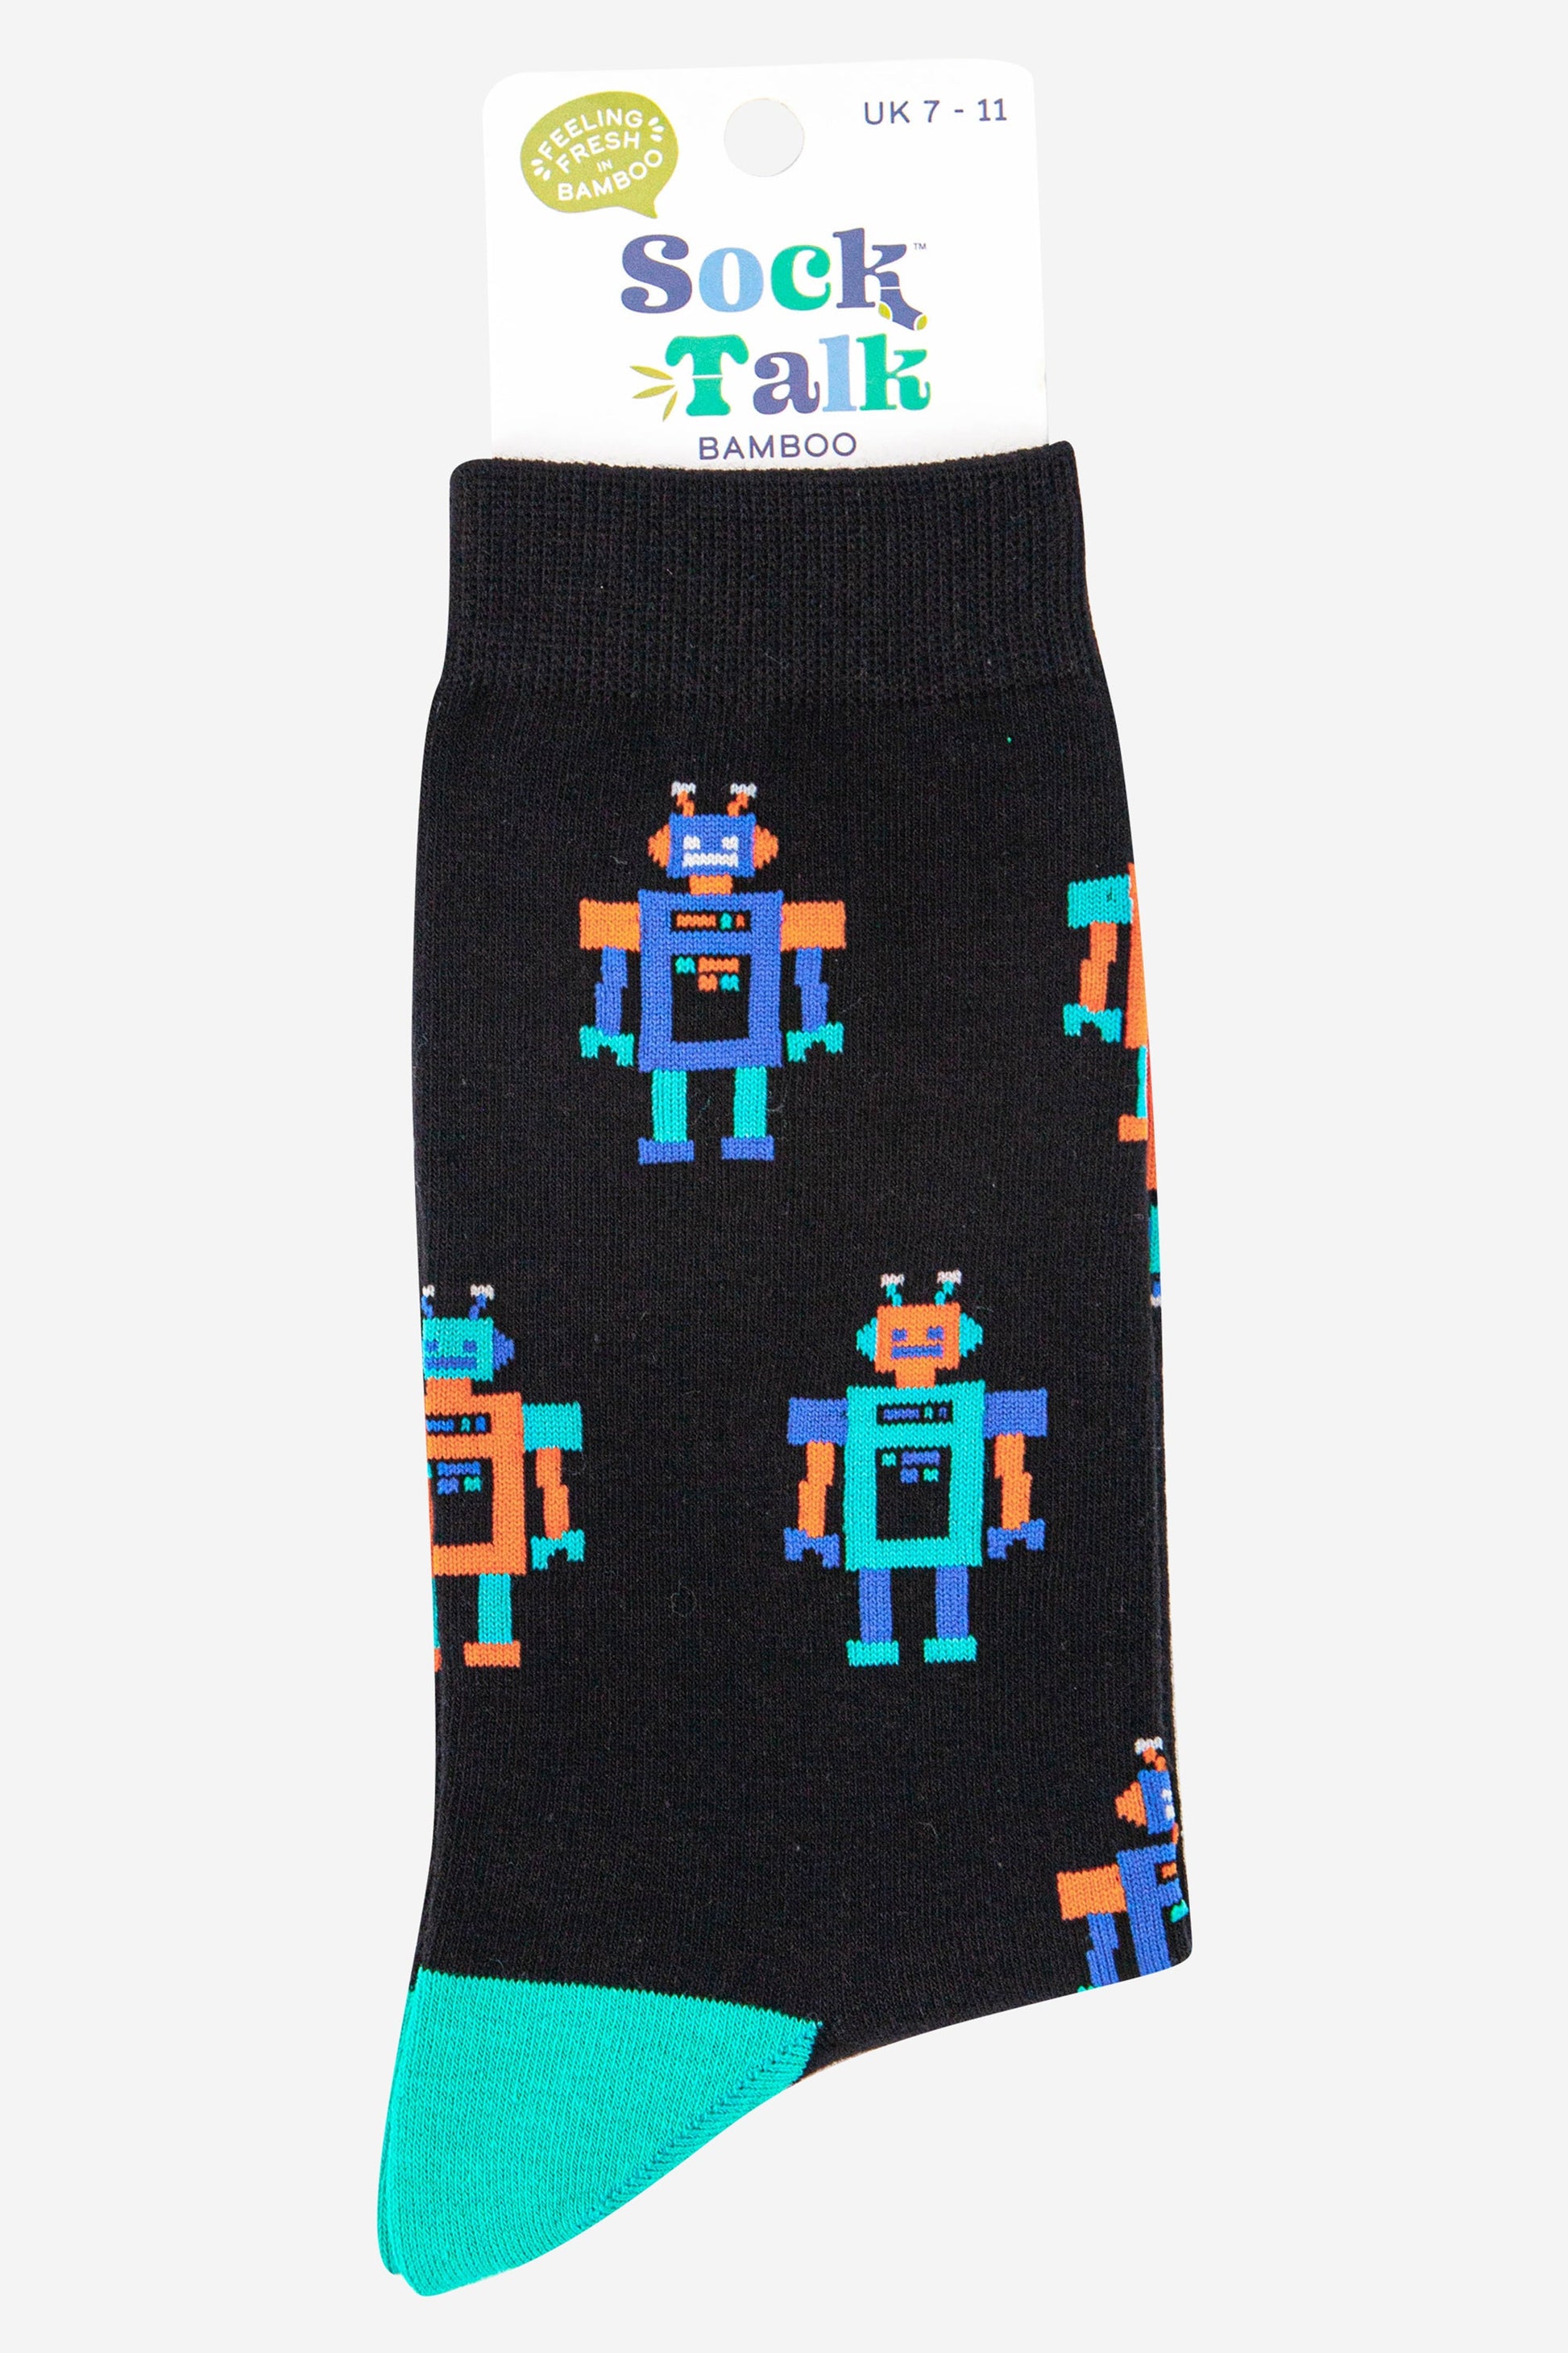 mens black robot socks uk size 7-11